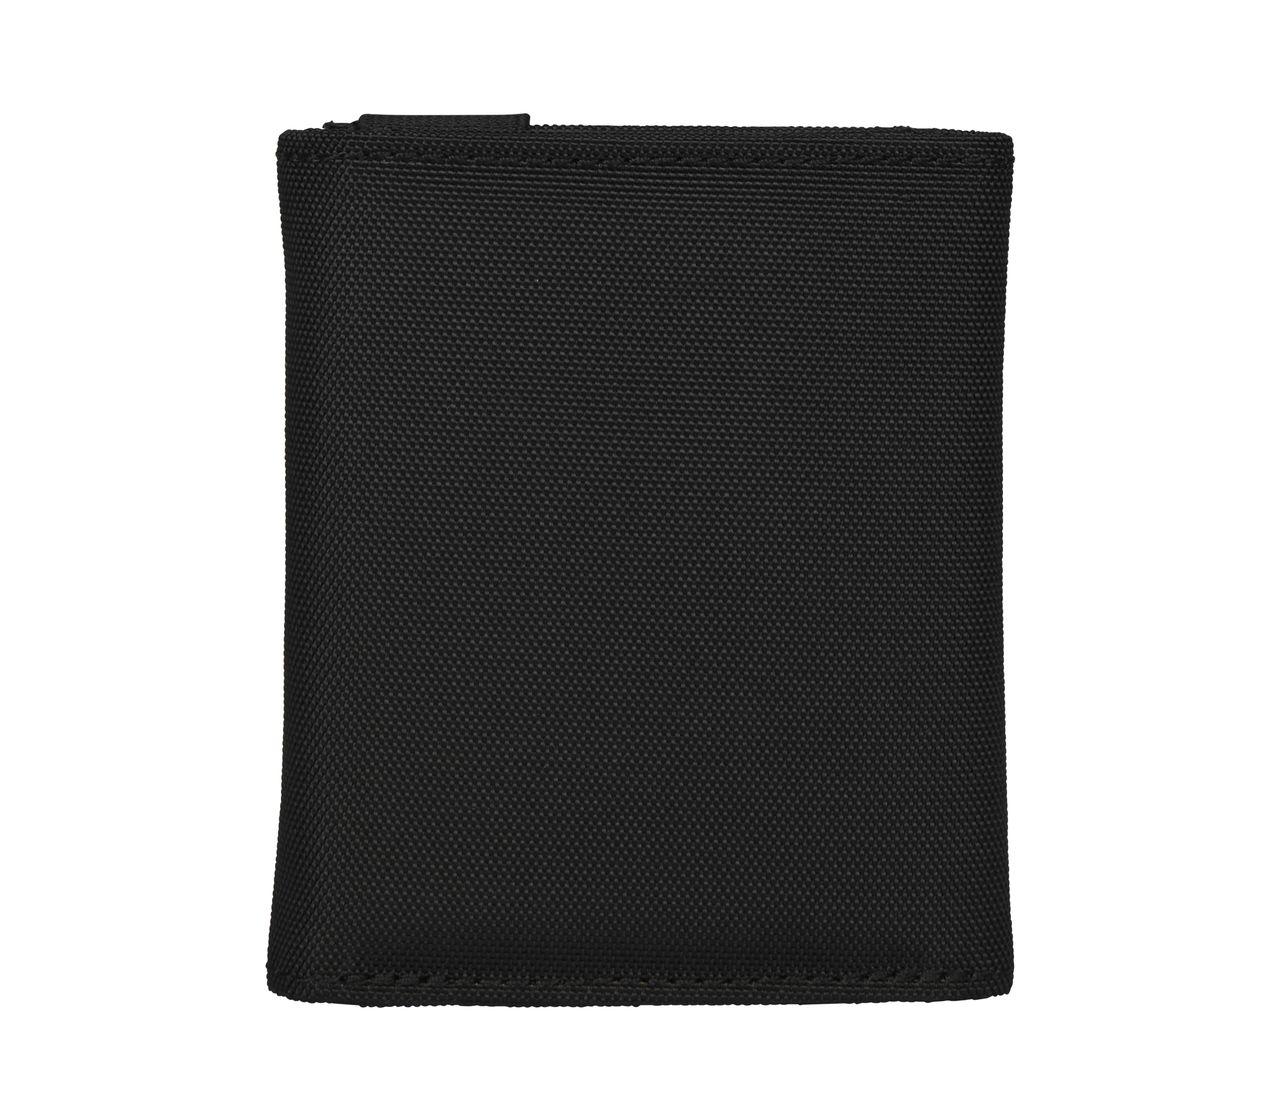 Victorinox Tri-fold Wallet in black - 610394